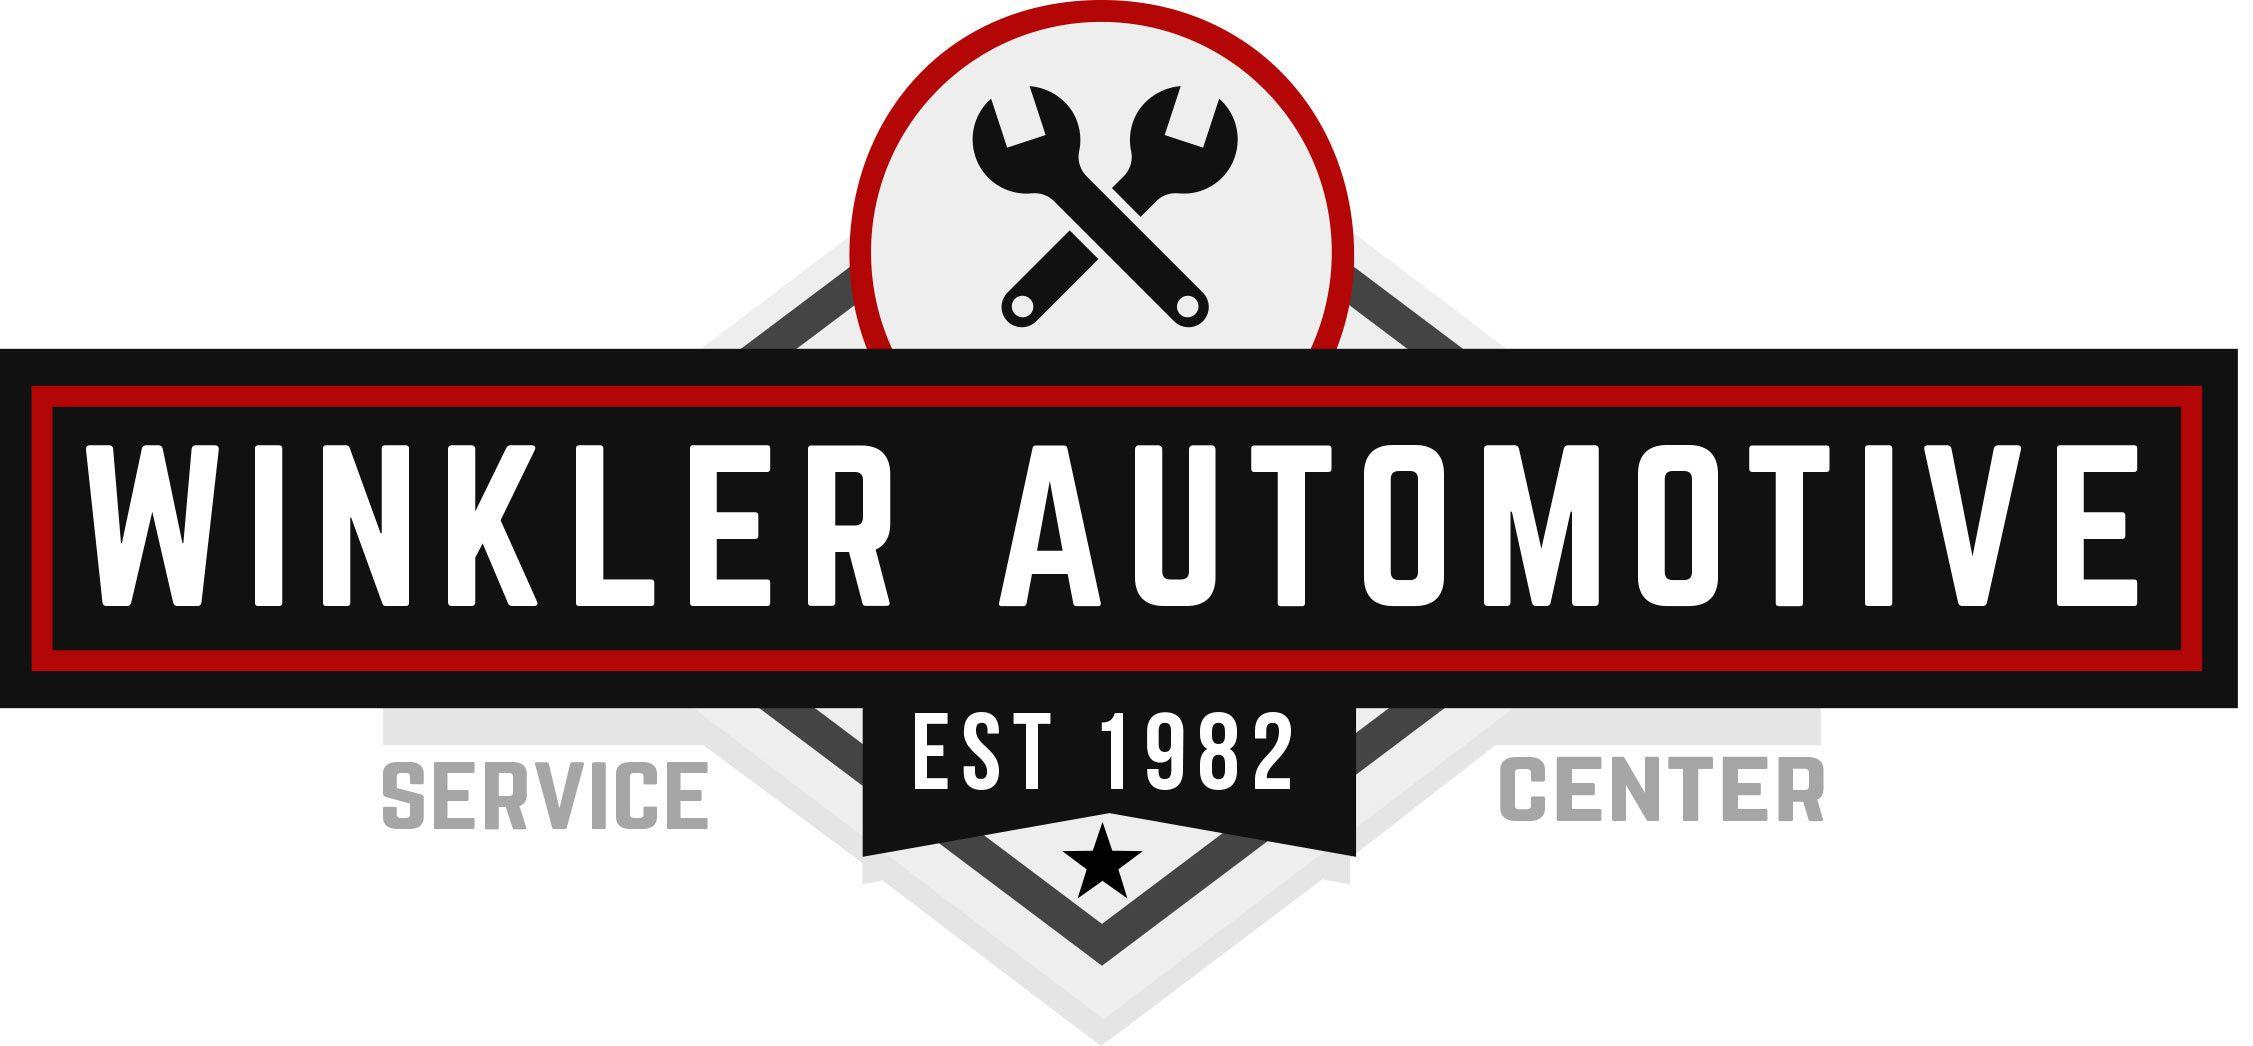 Auto Center Logo - Services – Winkler Automotive